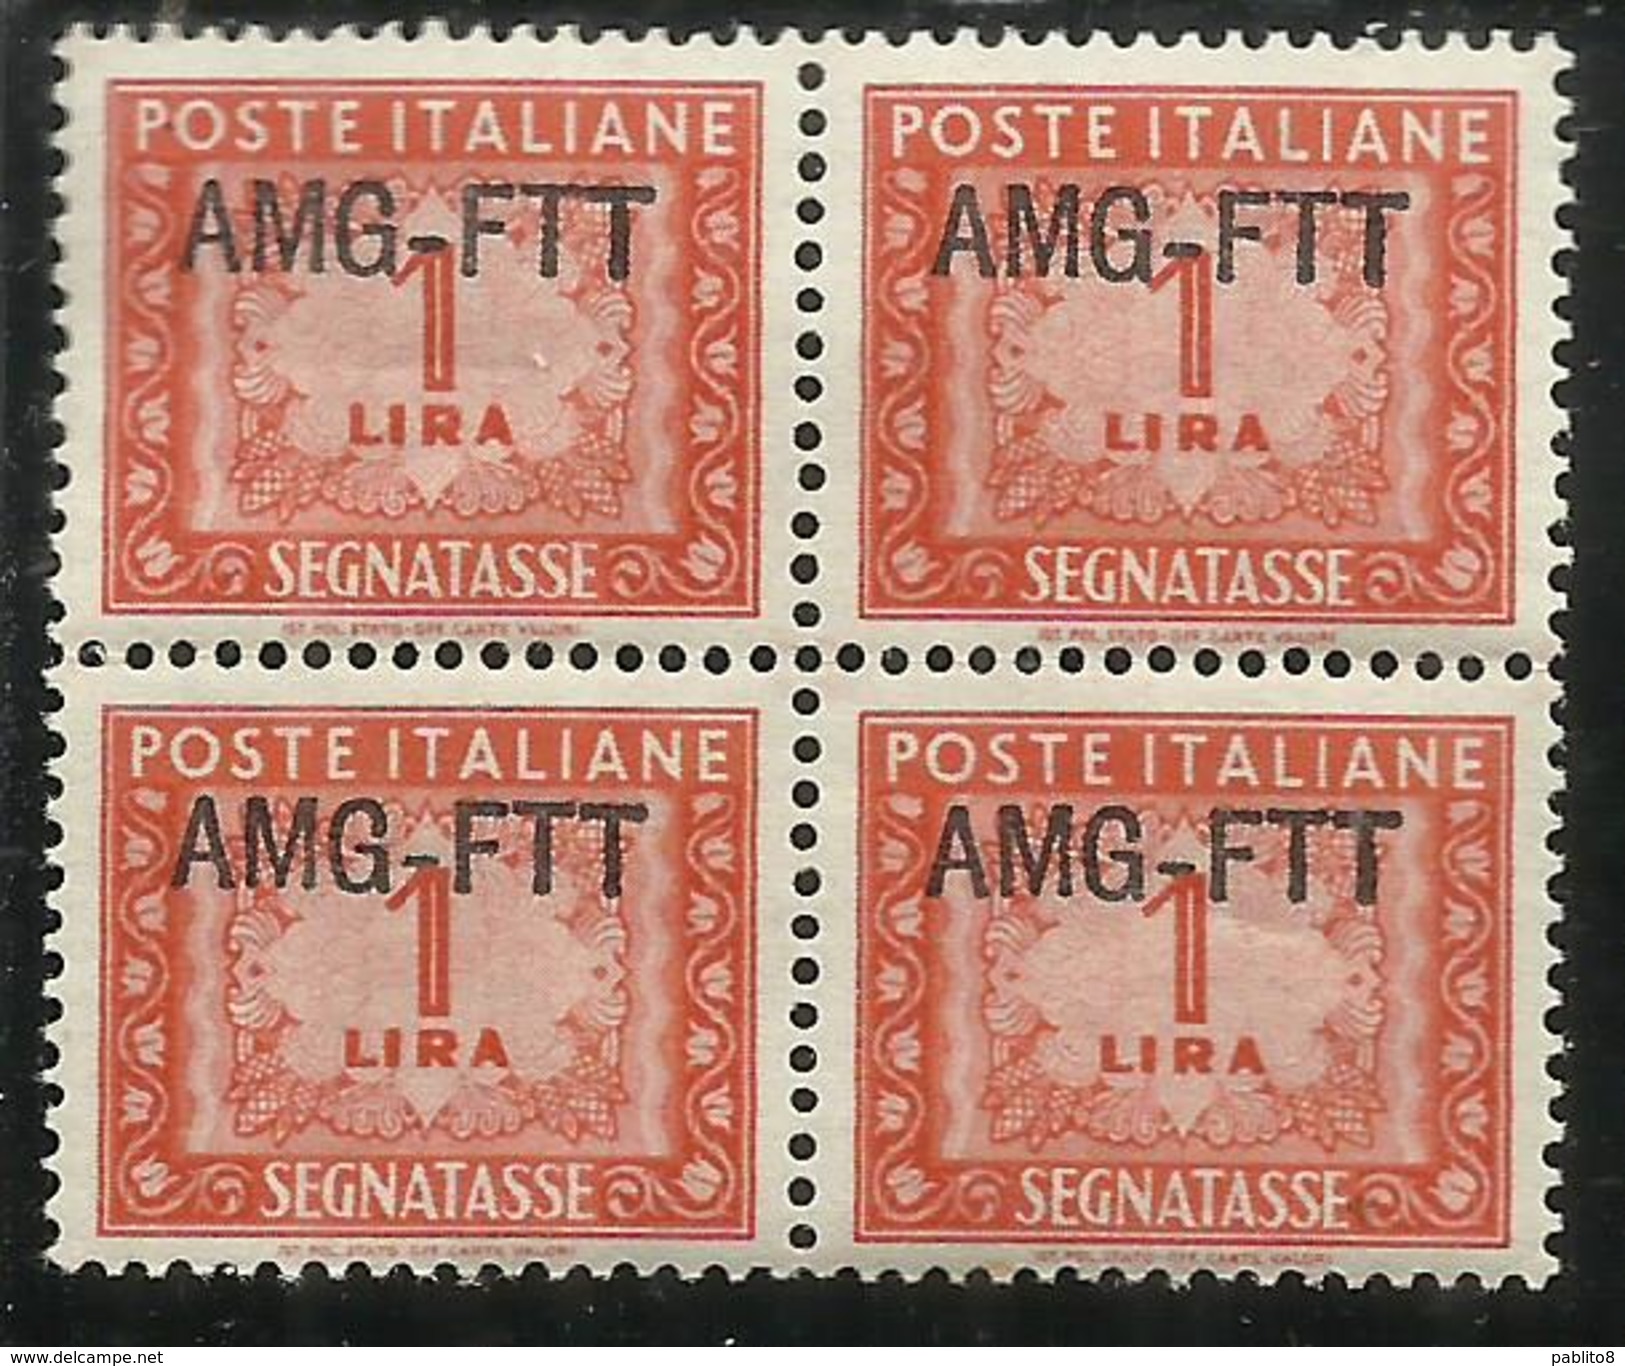 TRIESTE A 1949 1954 AMG-FTT SOPRASTAMPATO D´ITALIA ITALY OVERPRINTED SEGNATASSE POSTAGE DUE TAXES TASSE LIRE 1 MNH - Taxe